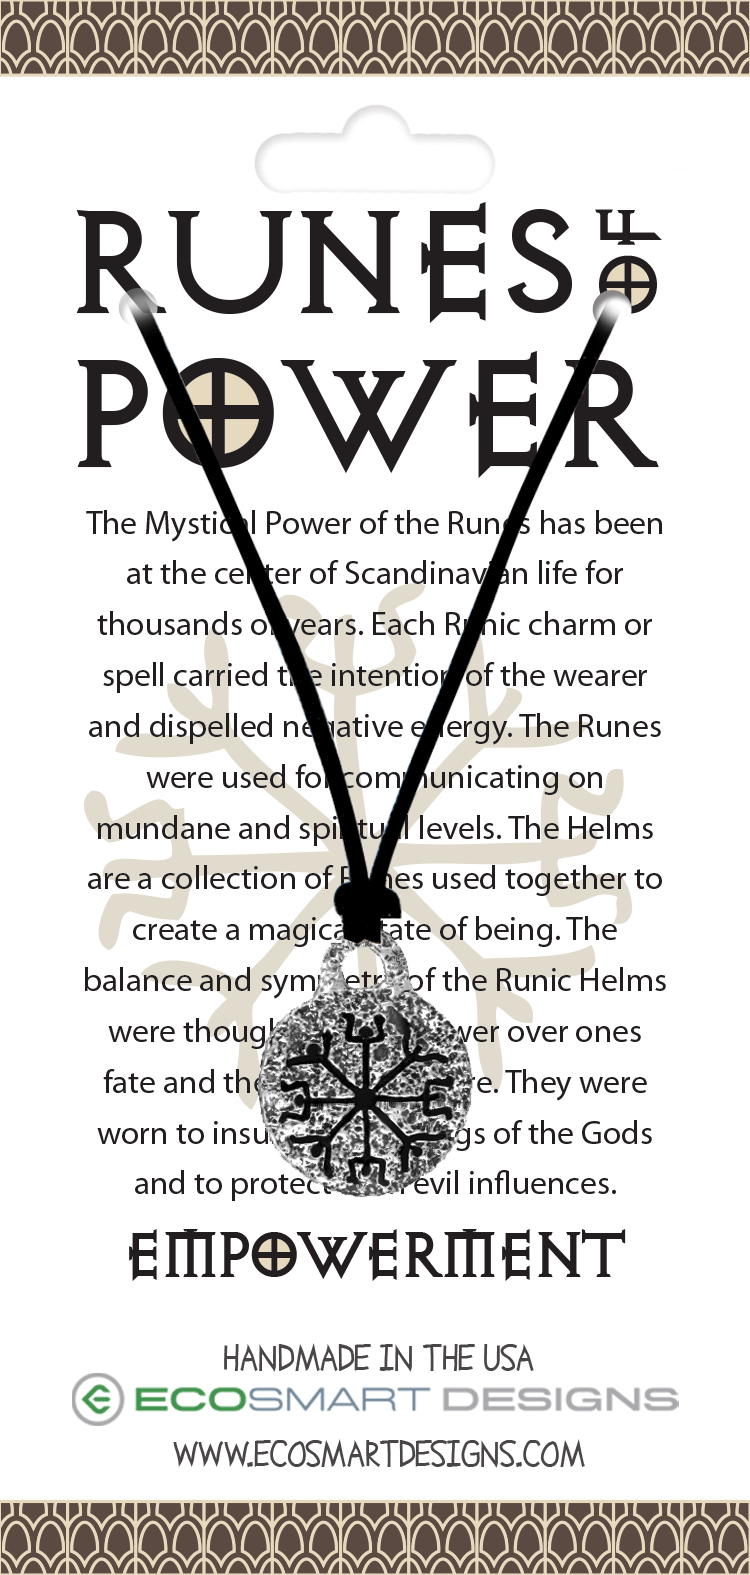 Runes of Power Helm of Empowerment charm on